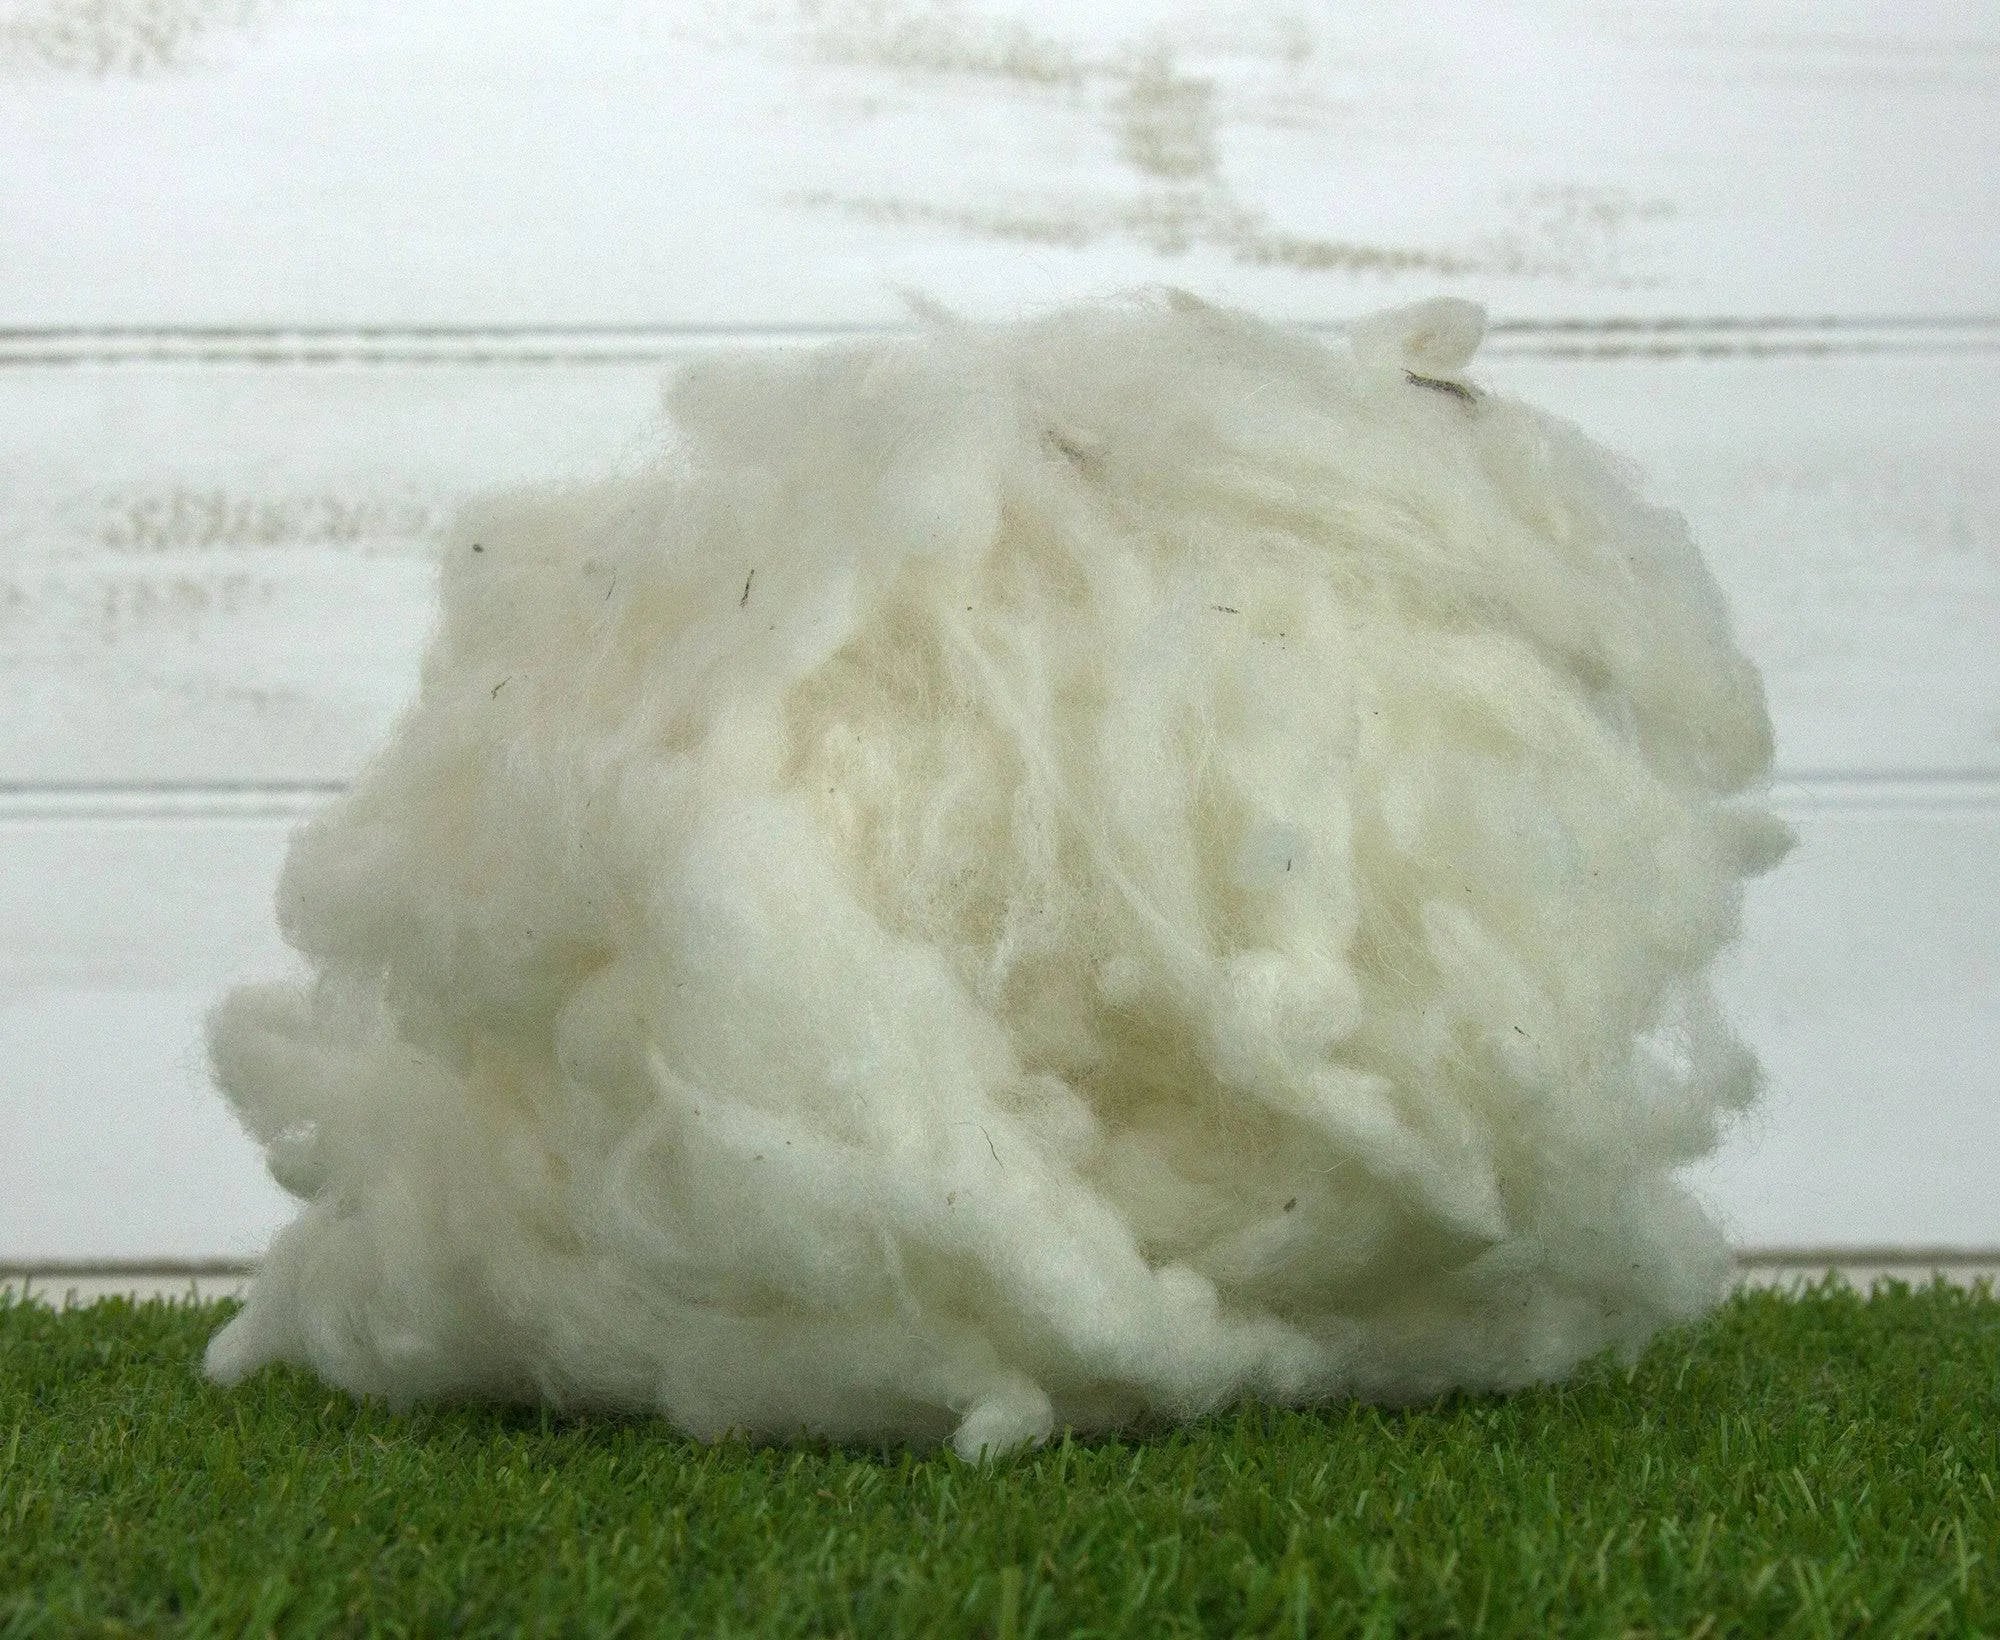 Scoured Corriedale Fleecewool - World of Wool